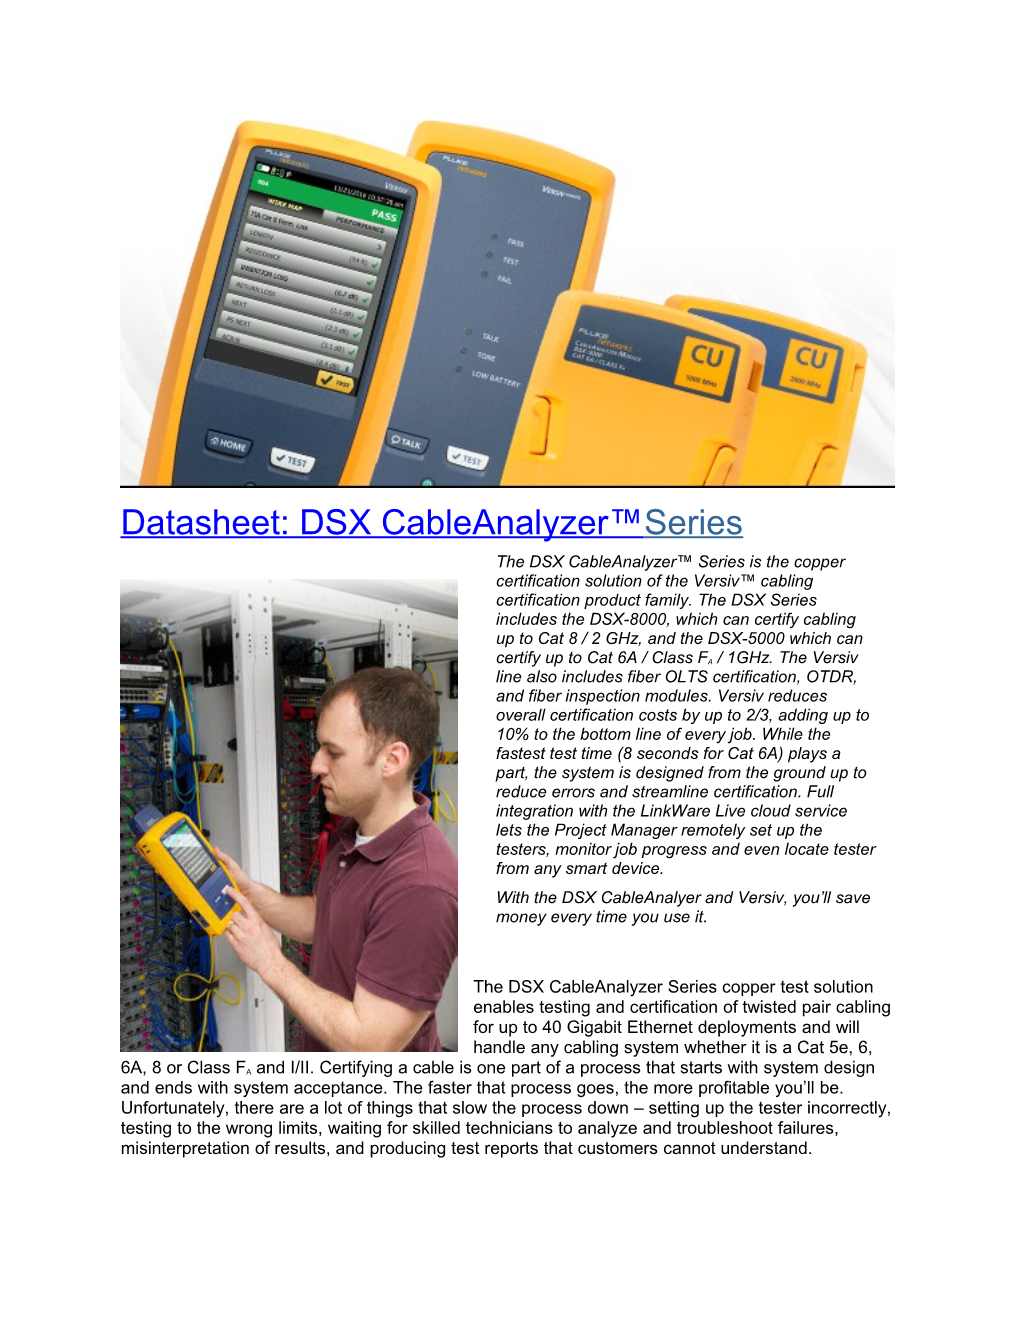 Datasheet: DSX Cableanalyzer Series